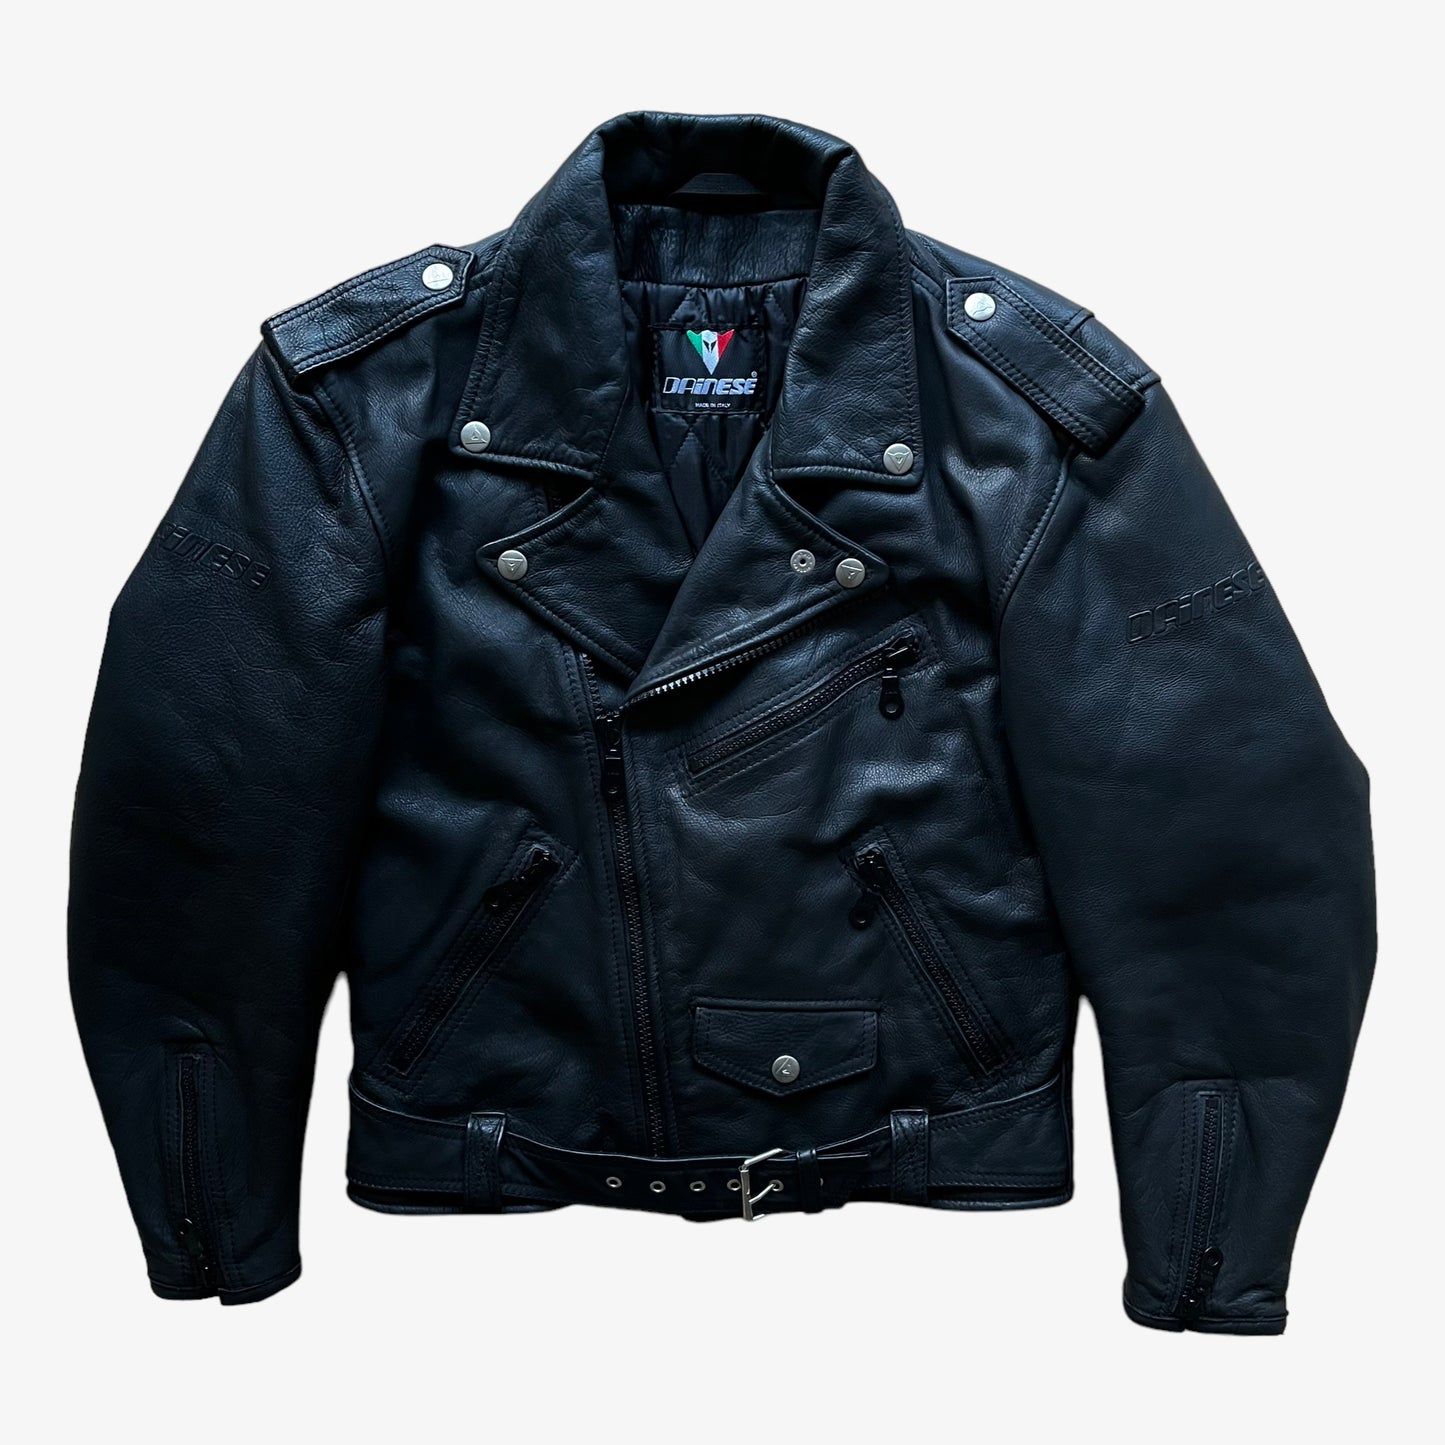 Vintage 90s Womens Dainese Black Leather Biker Jacket - Casspios Dream